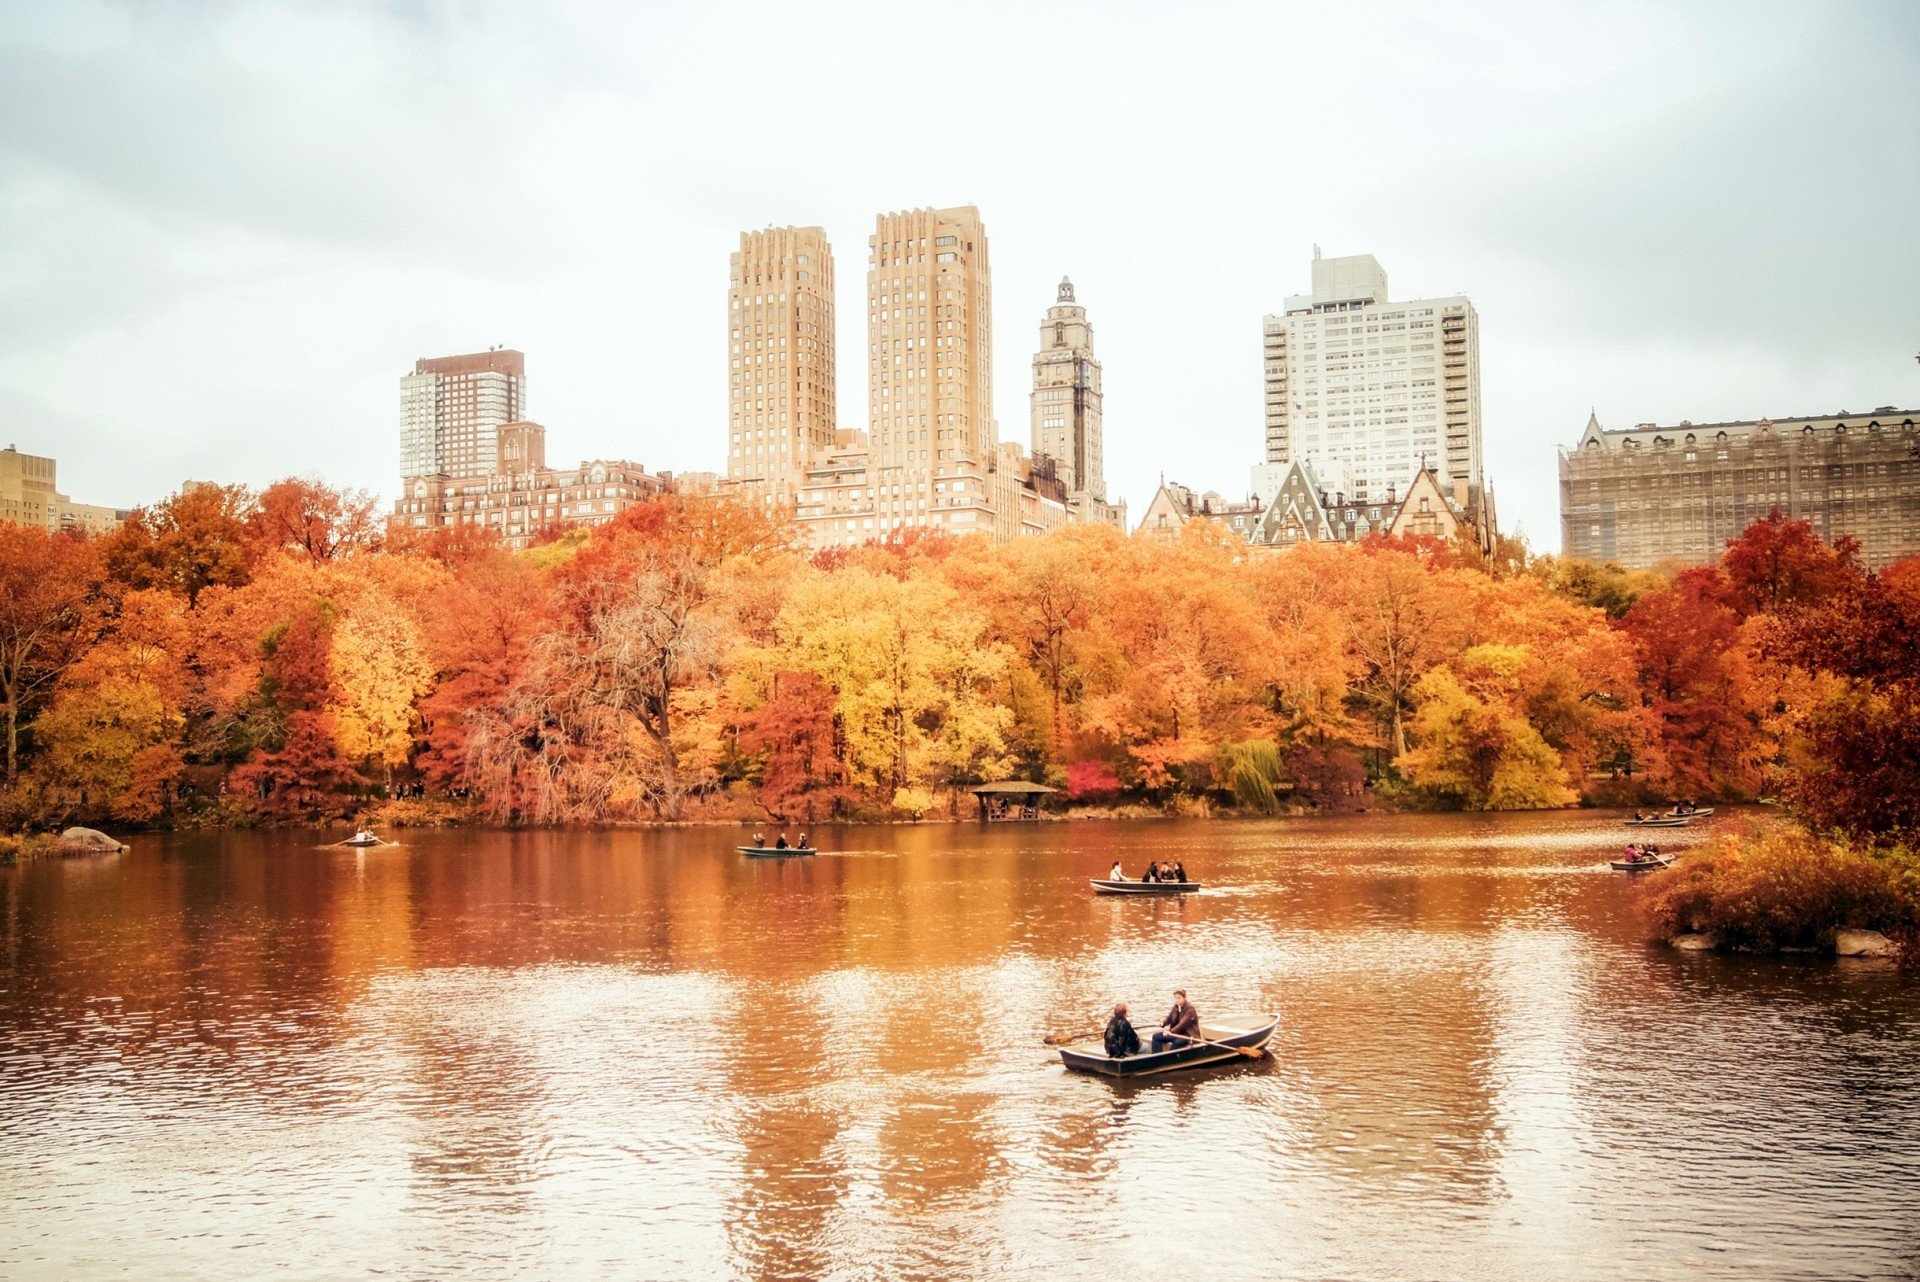 Централ парк Нью-Йорк. Осенний Нью-Йорк централ парк. Осень в Нью-Йорке Центральный парк. Центральный парк Нью-Йорк осенью. Картинки природы города